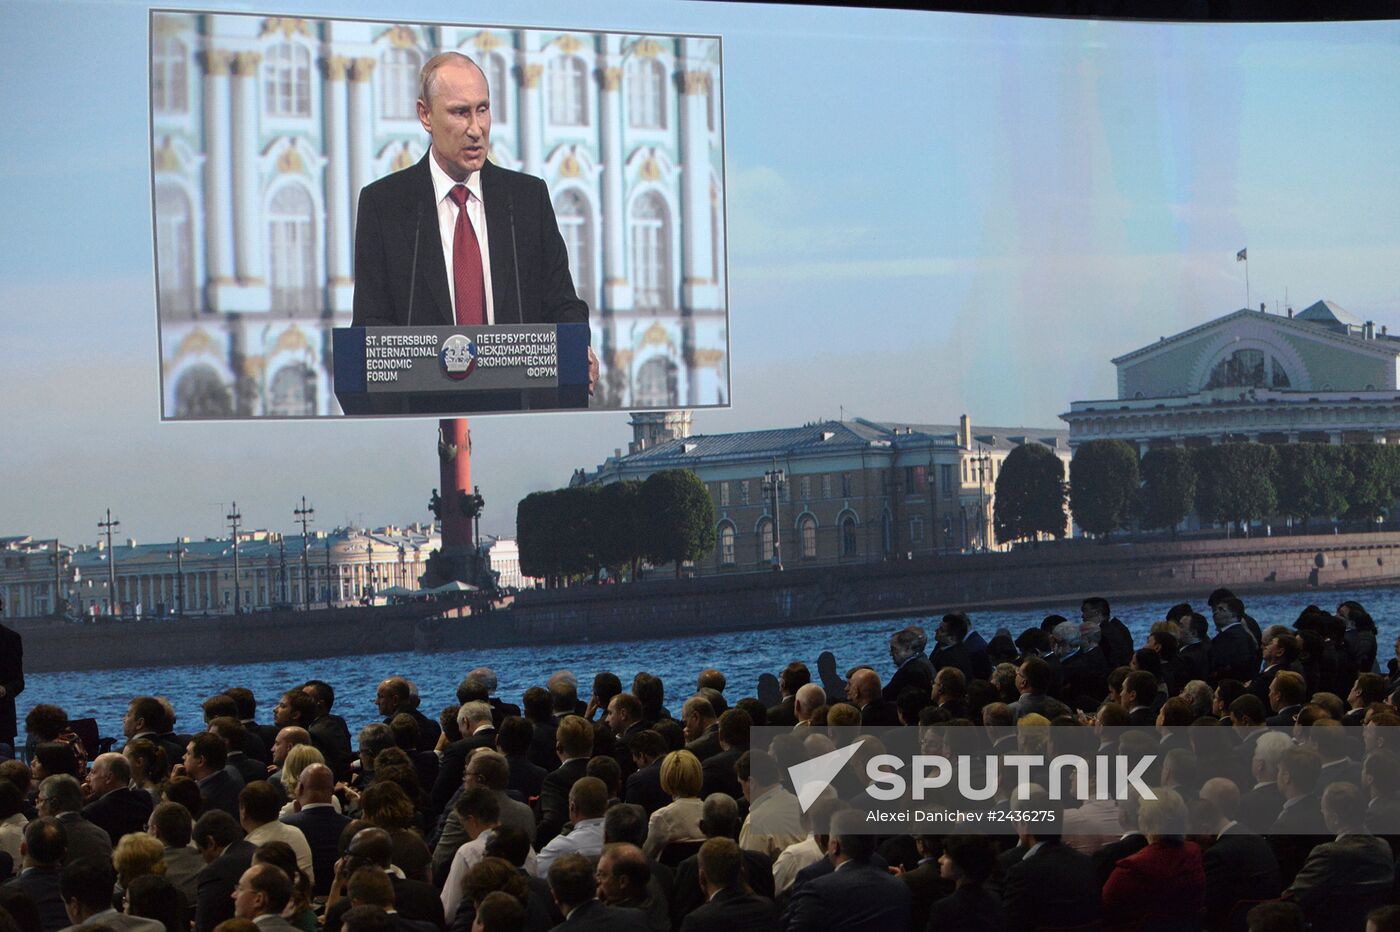 Vladimir Putin attends St. Petersburg International Economic Forum